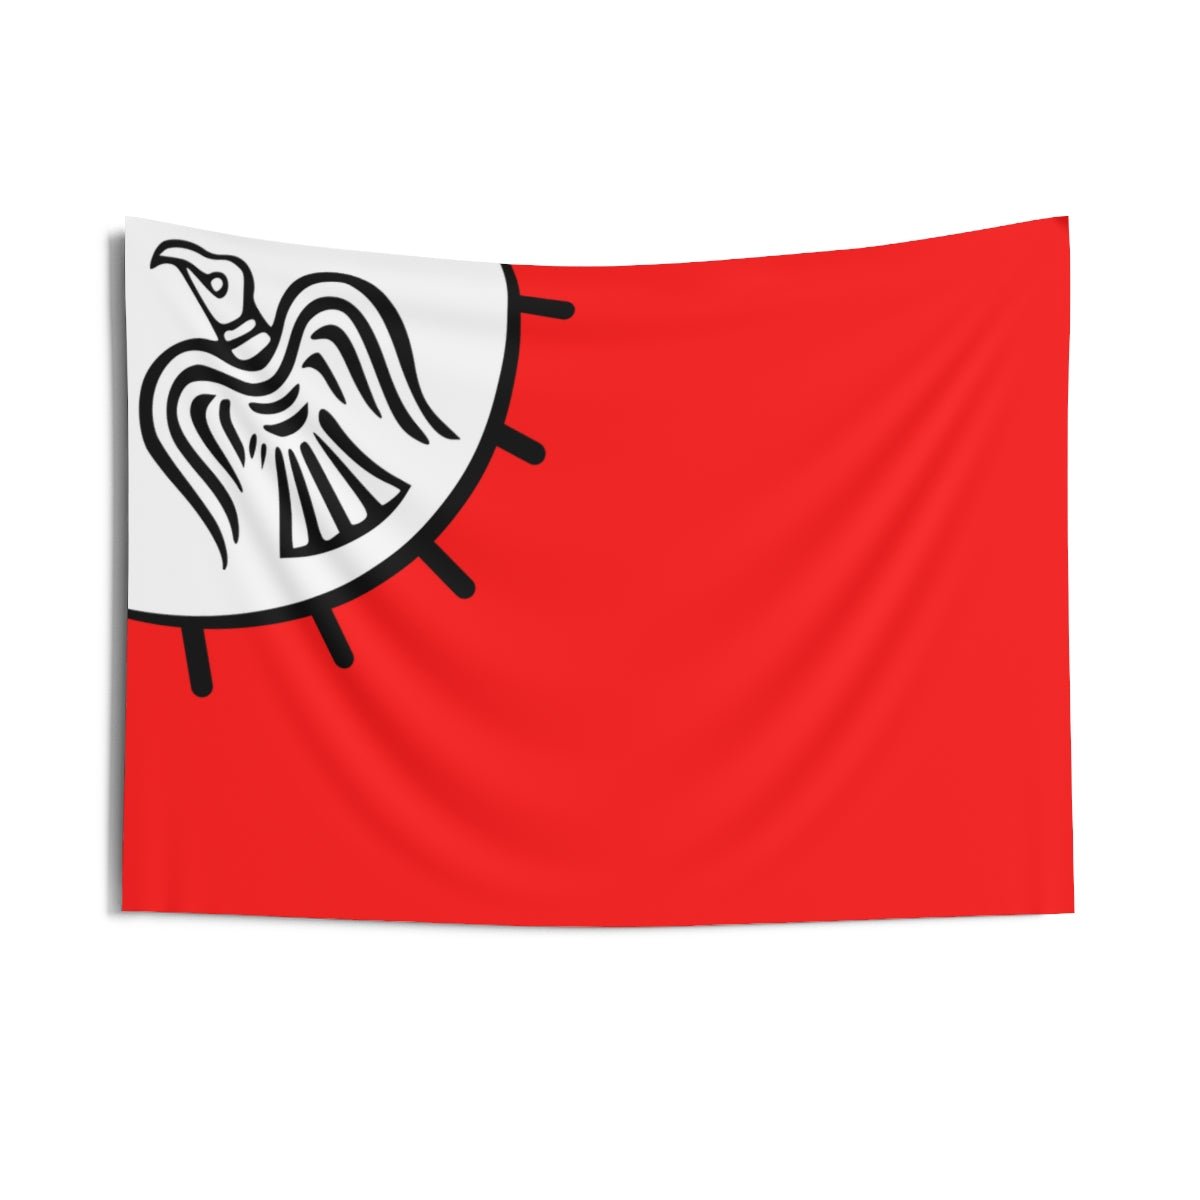 AHSTW Viking rag flag, red, white, and Blue Viking and Lady Vikes